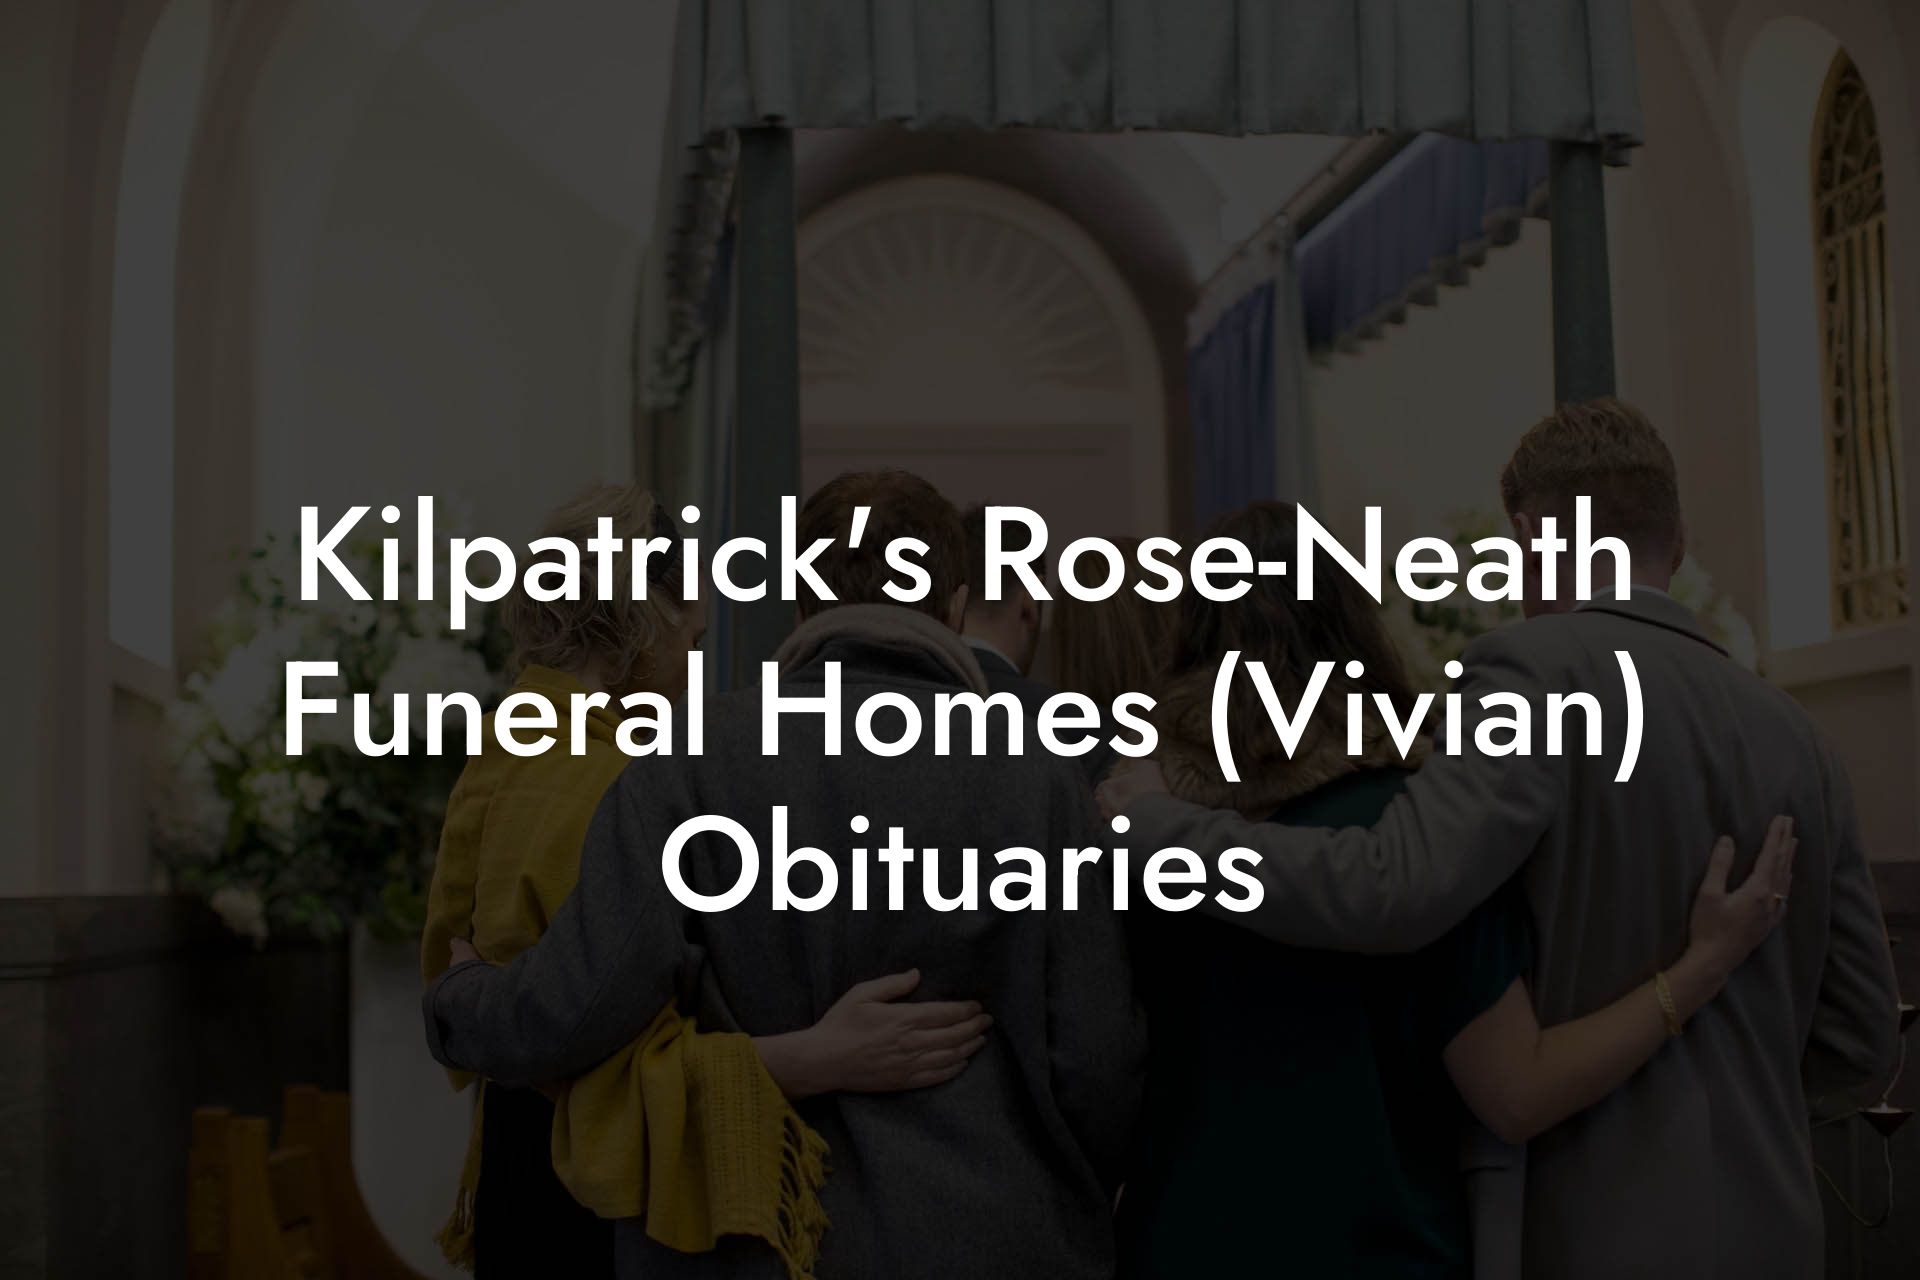 Kilpatrick's Rose-Neath Funeral Homes (Vivian) Obituaries